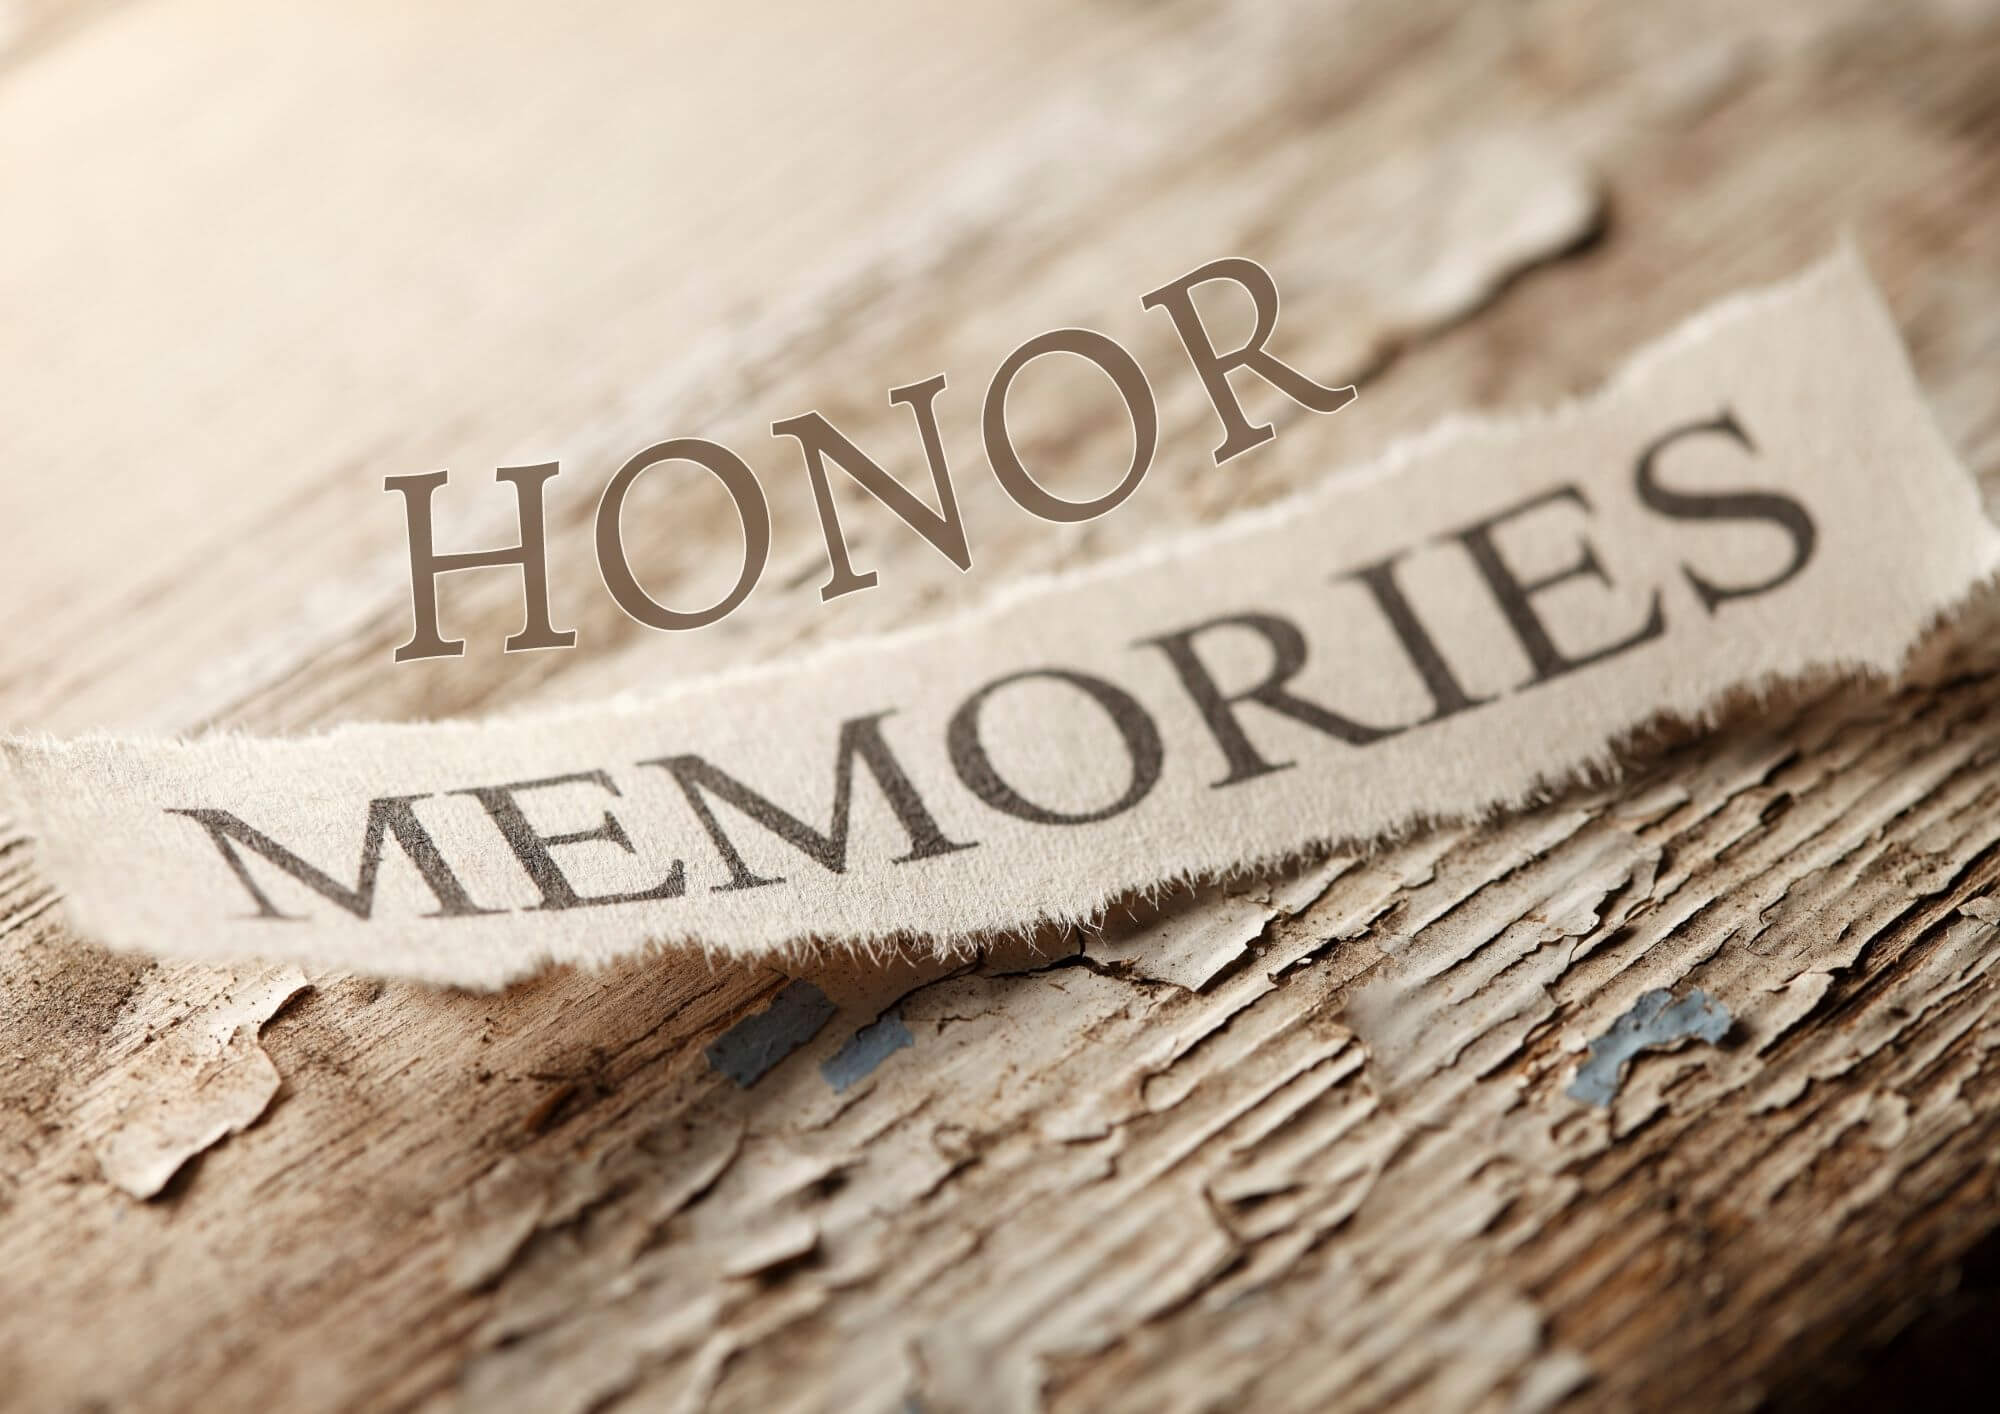 Rustic log with honor memories written across it